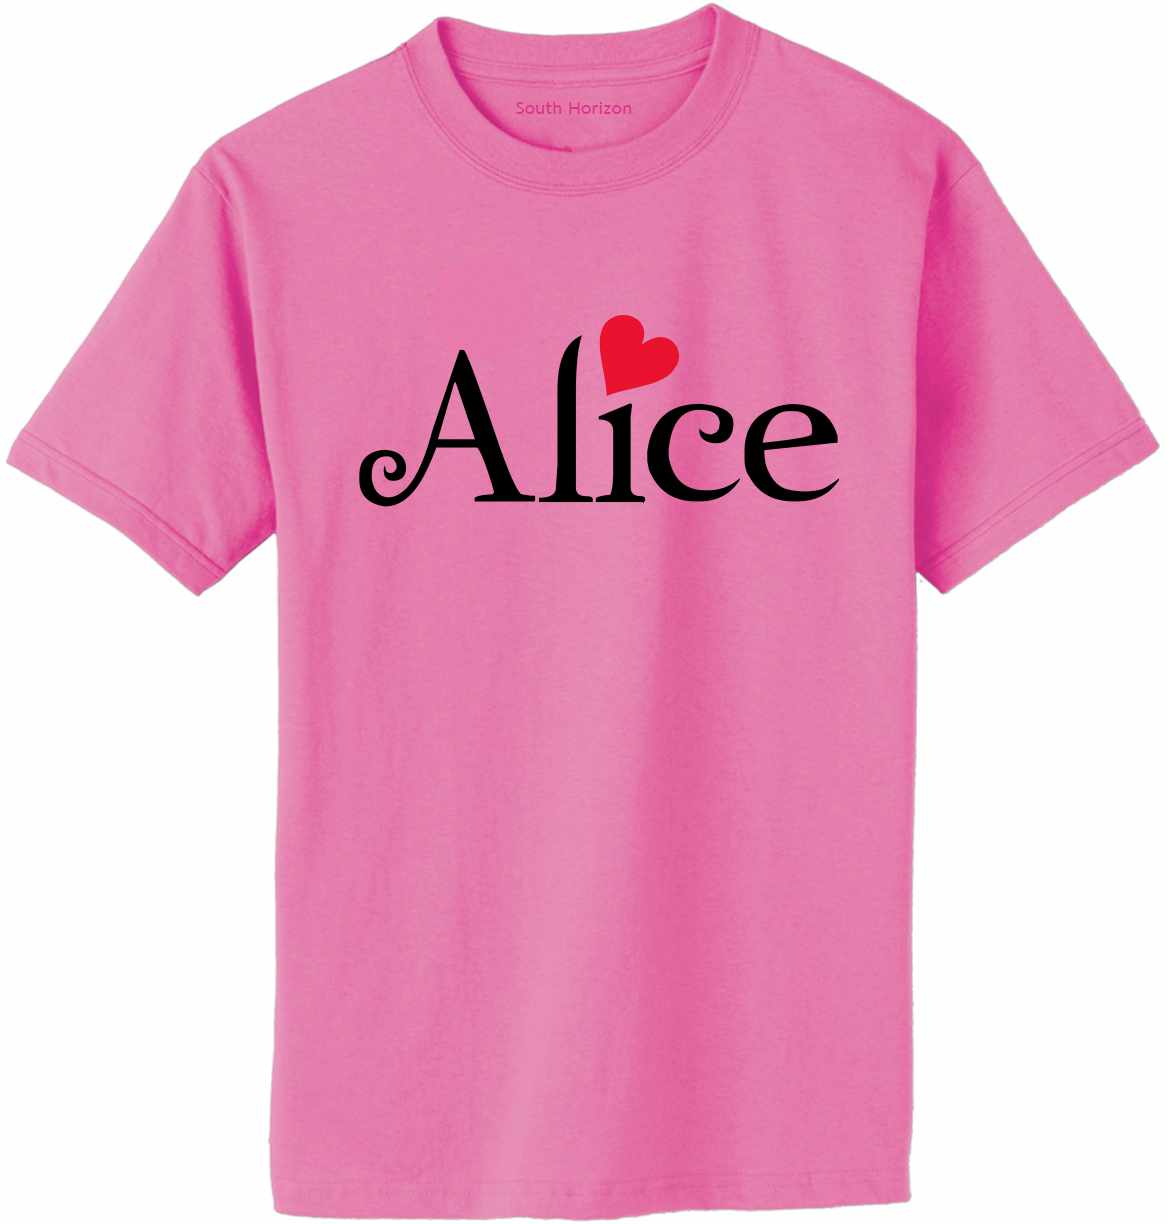 Alice Adult T-Shirt